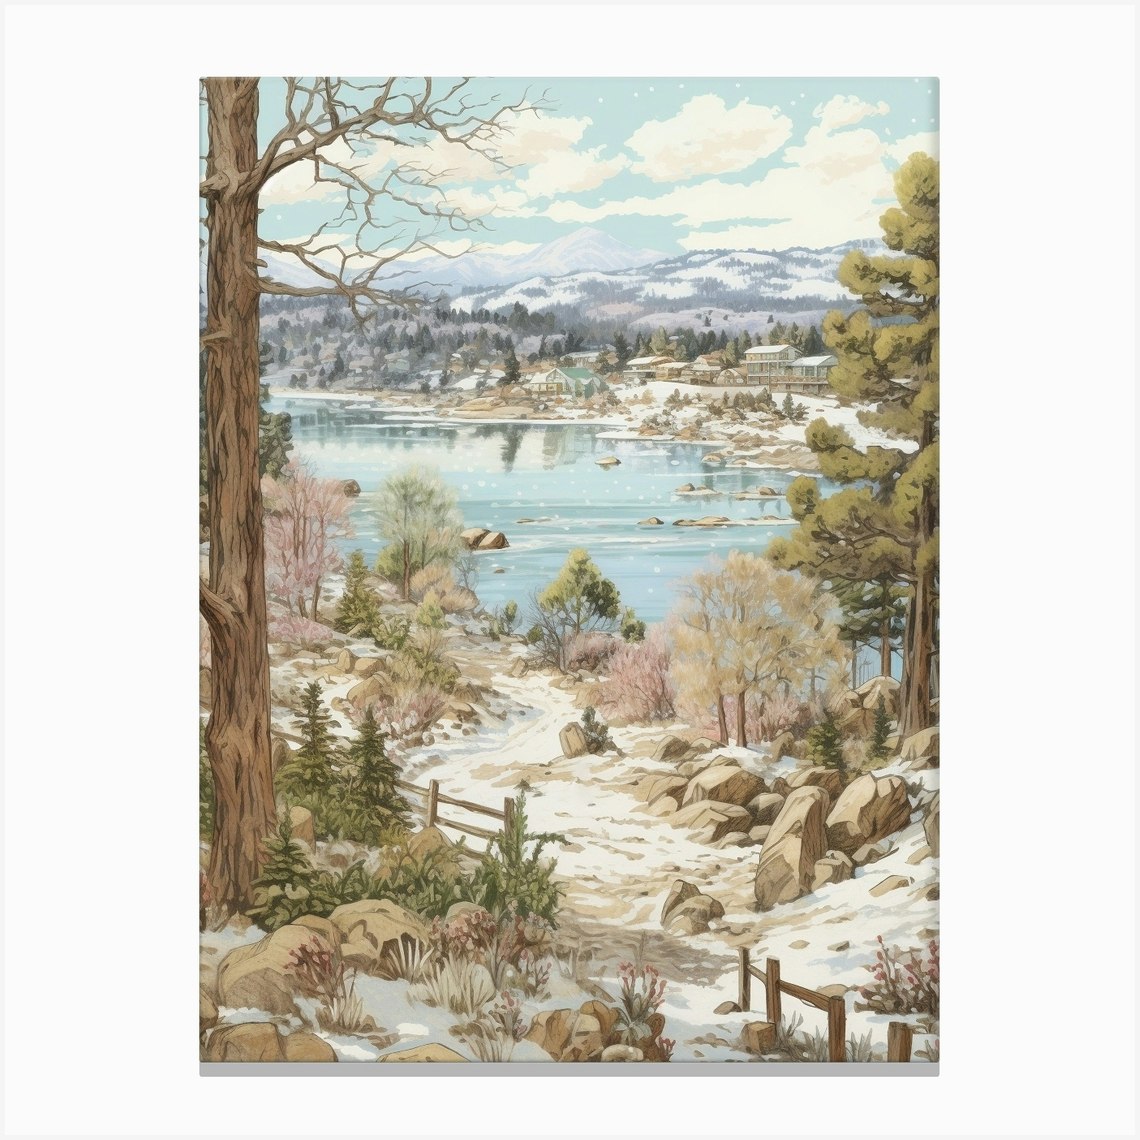 Vintage Winter Illustration Big Bear Lake California 2 Canvas Print by Bon  Hiver Prints - Fy